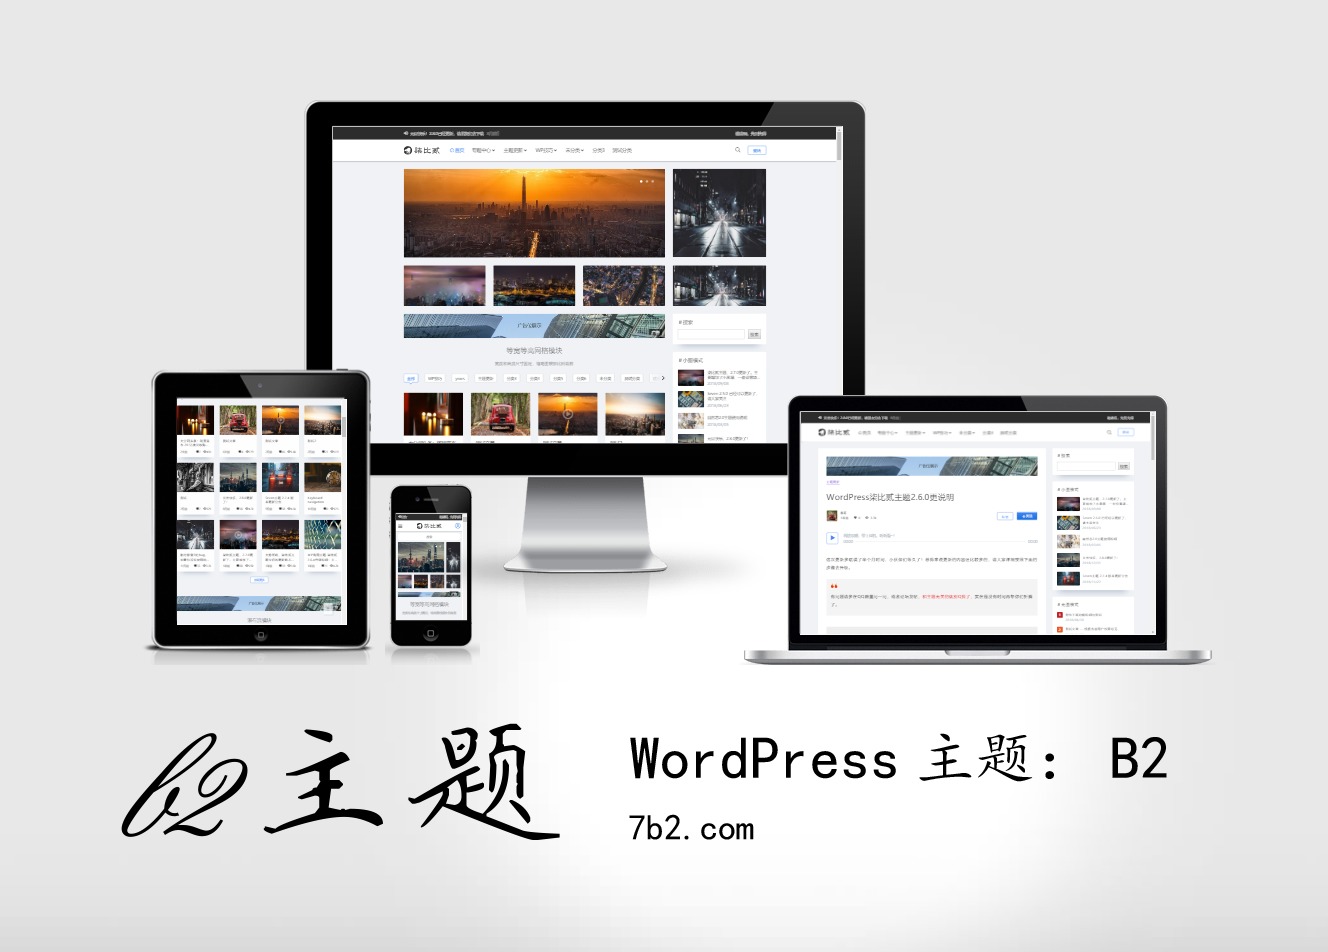 B2 PRO best WordPress theme